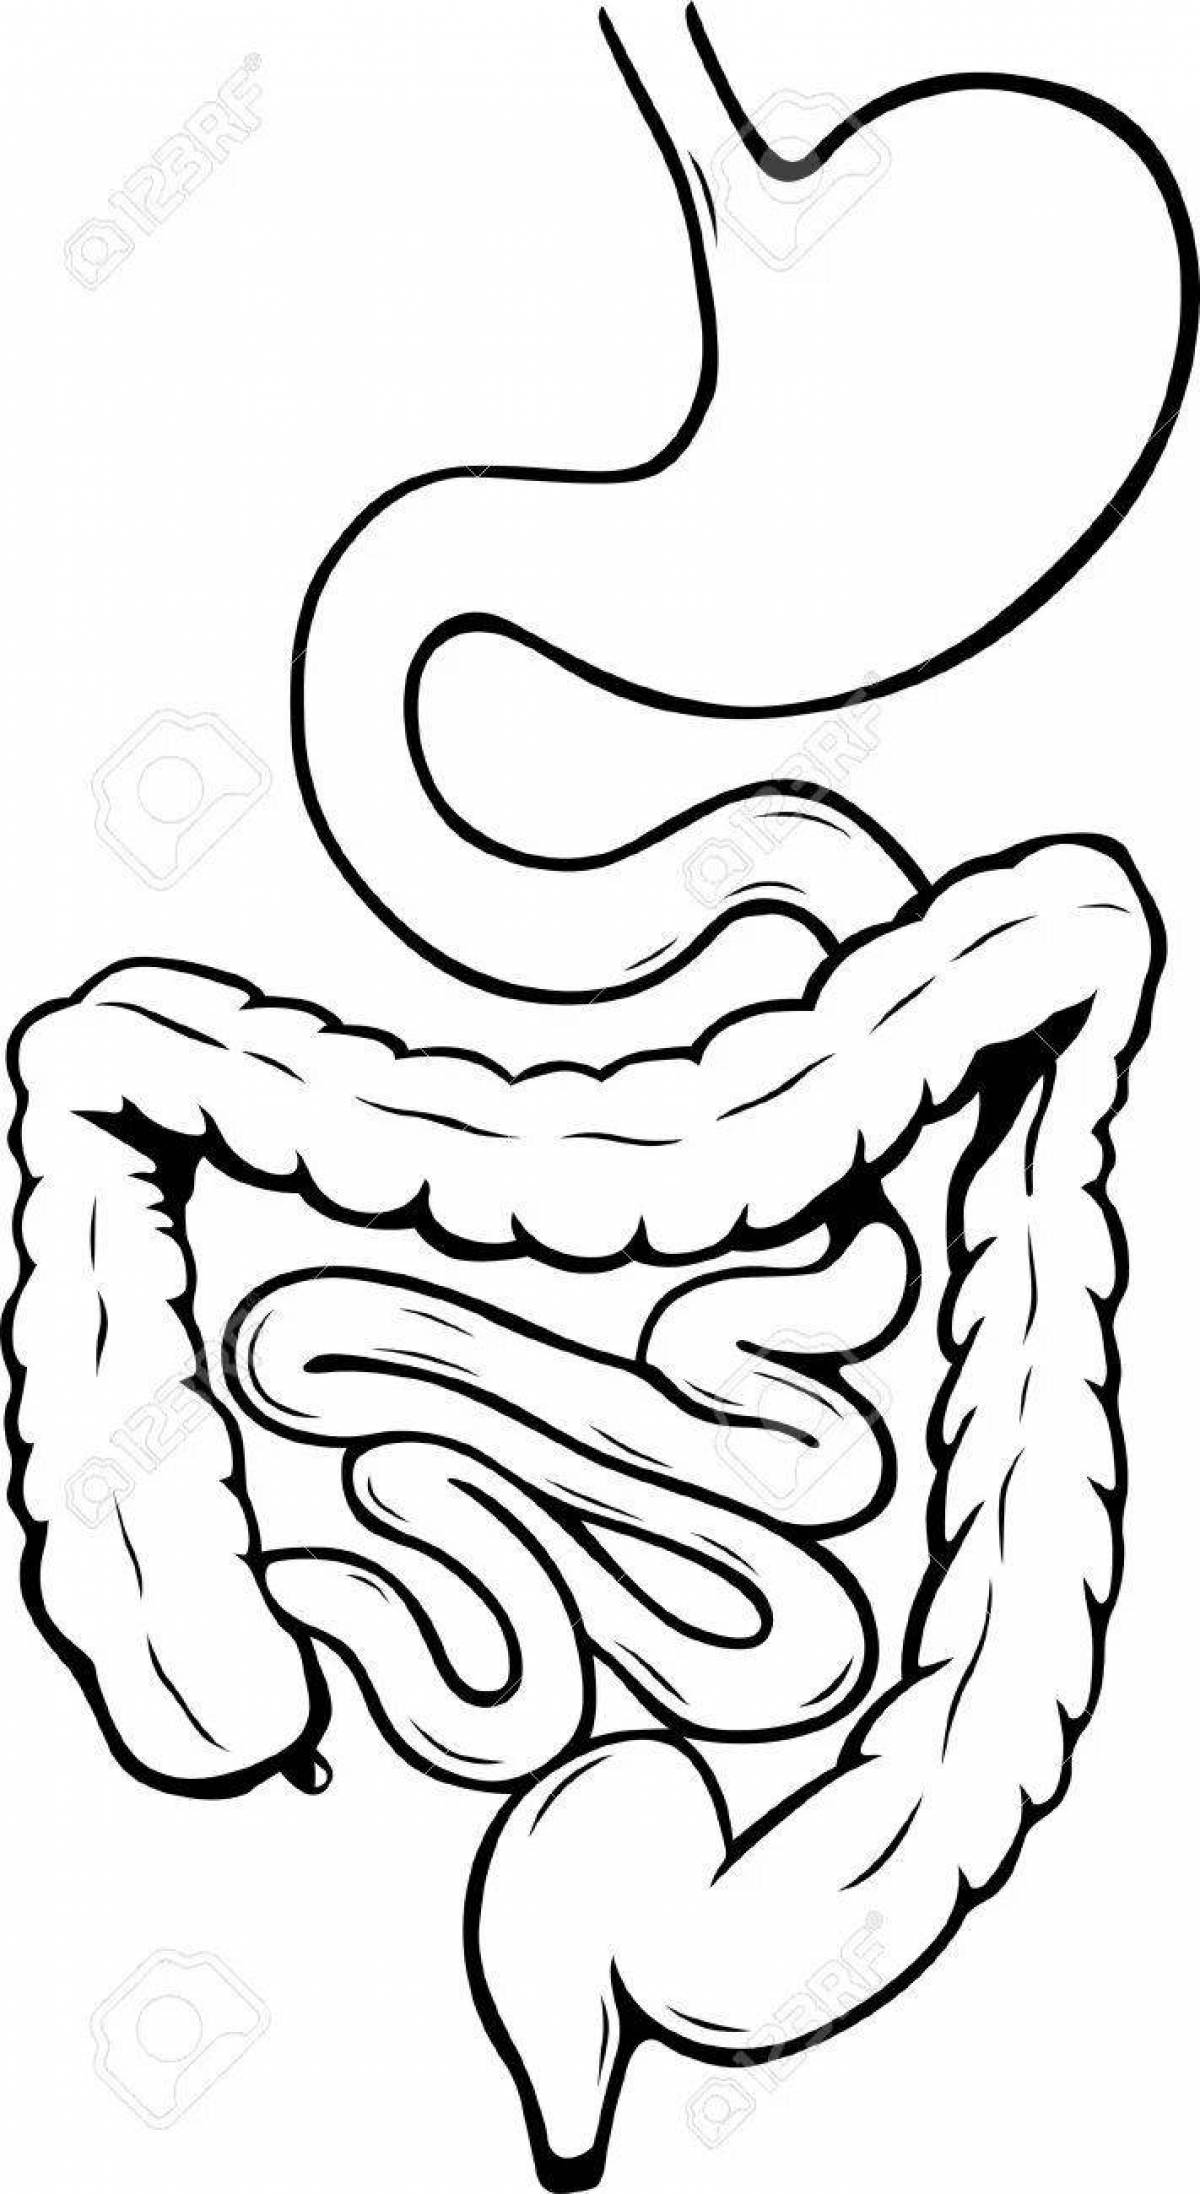 Fun coloring of intestines